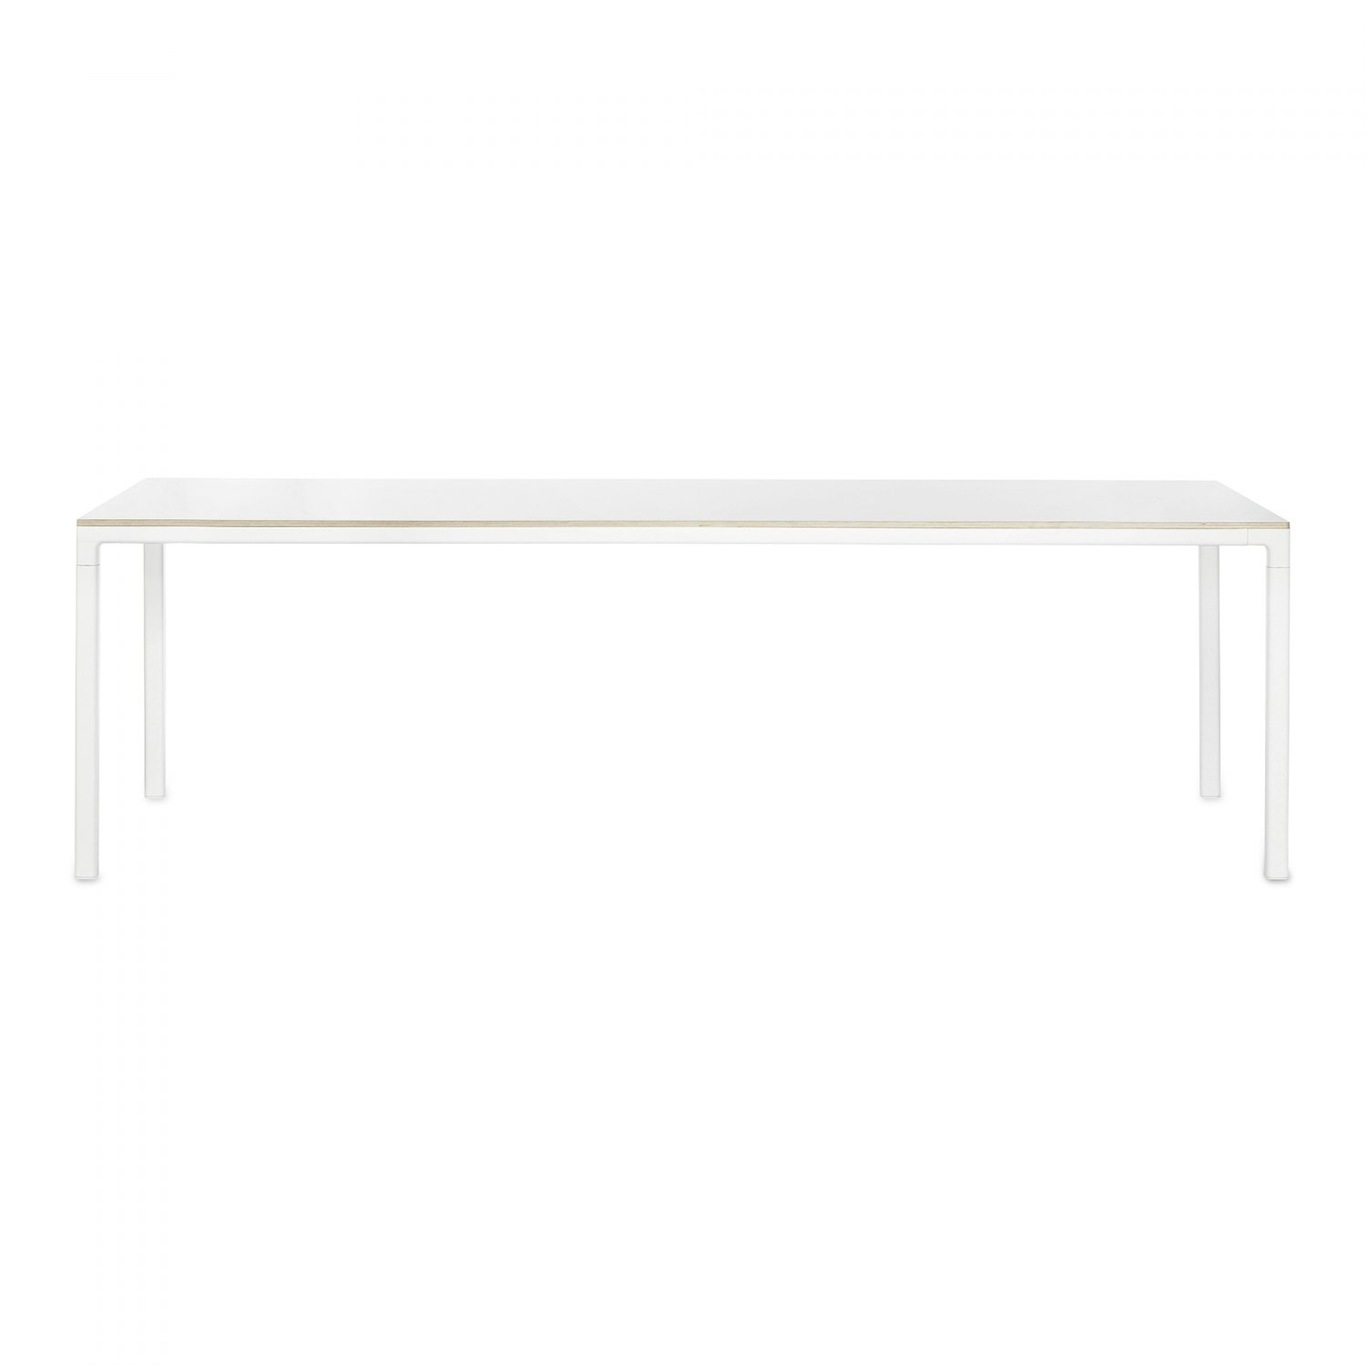 T12 Table 120x250 cm, White